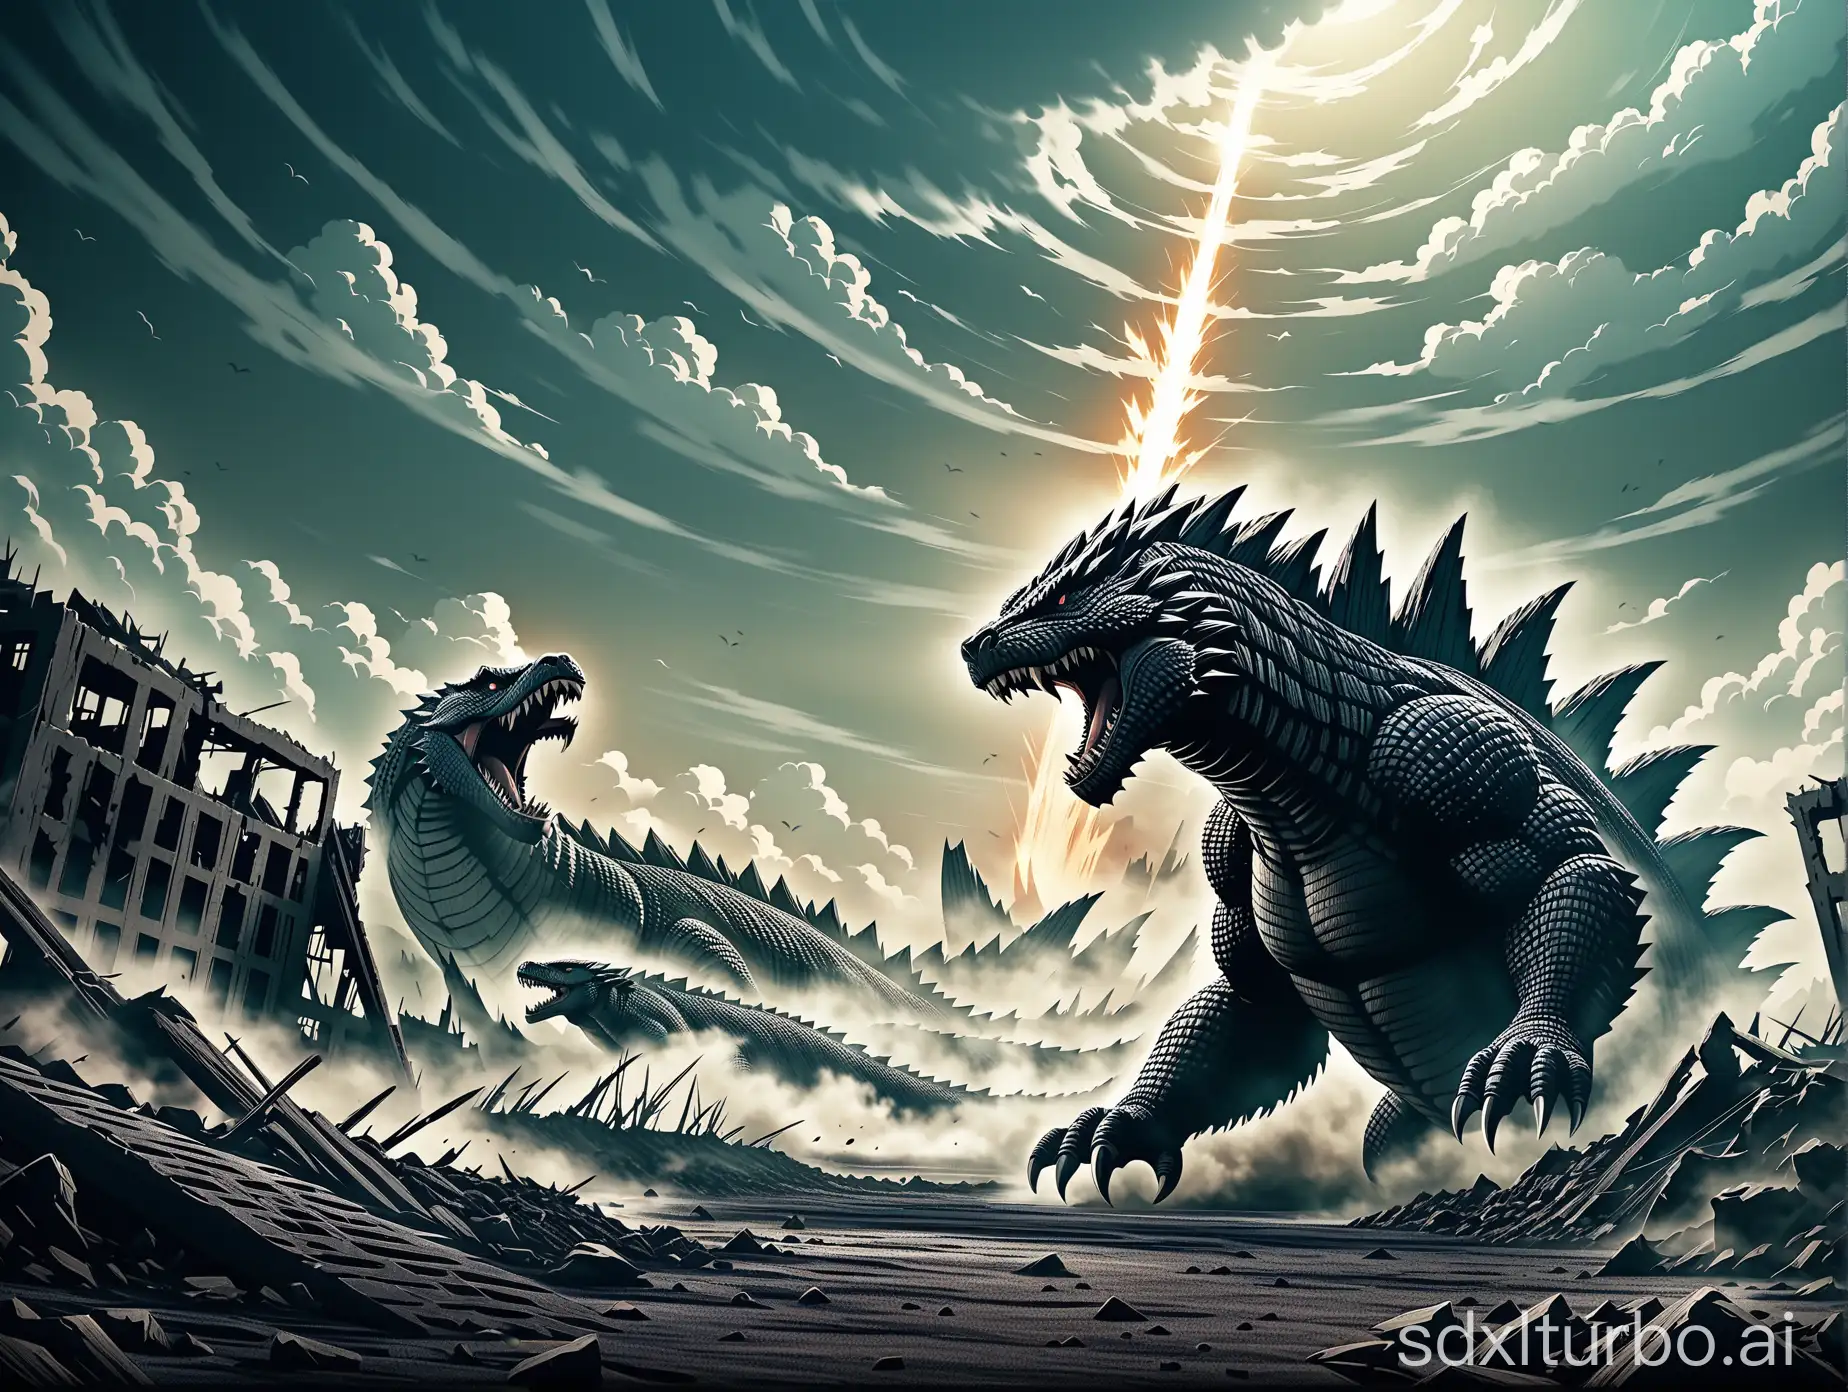 Apocalyptic-Cinematic-Photography-Fierce-GodzillaLike-Monster-Invades-Earth